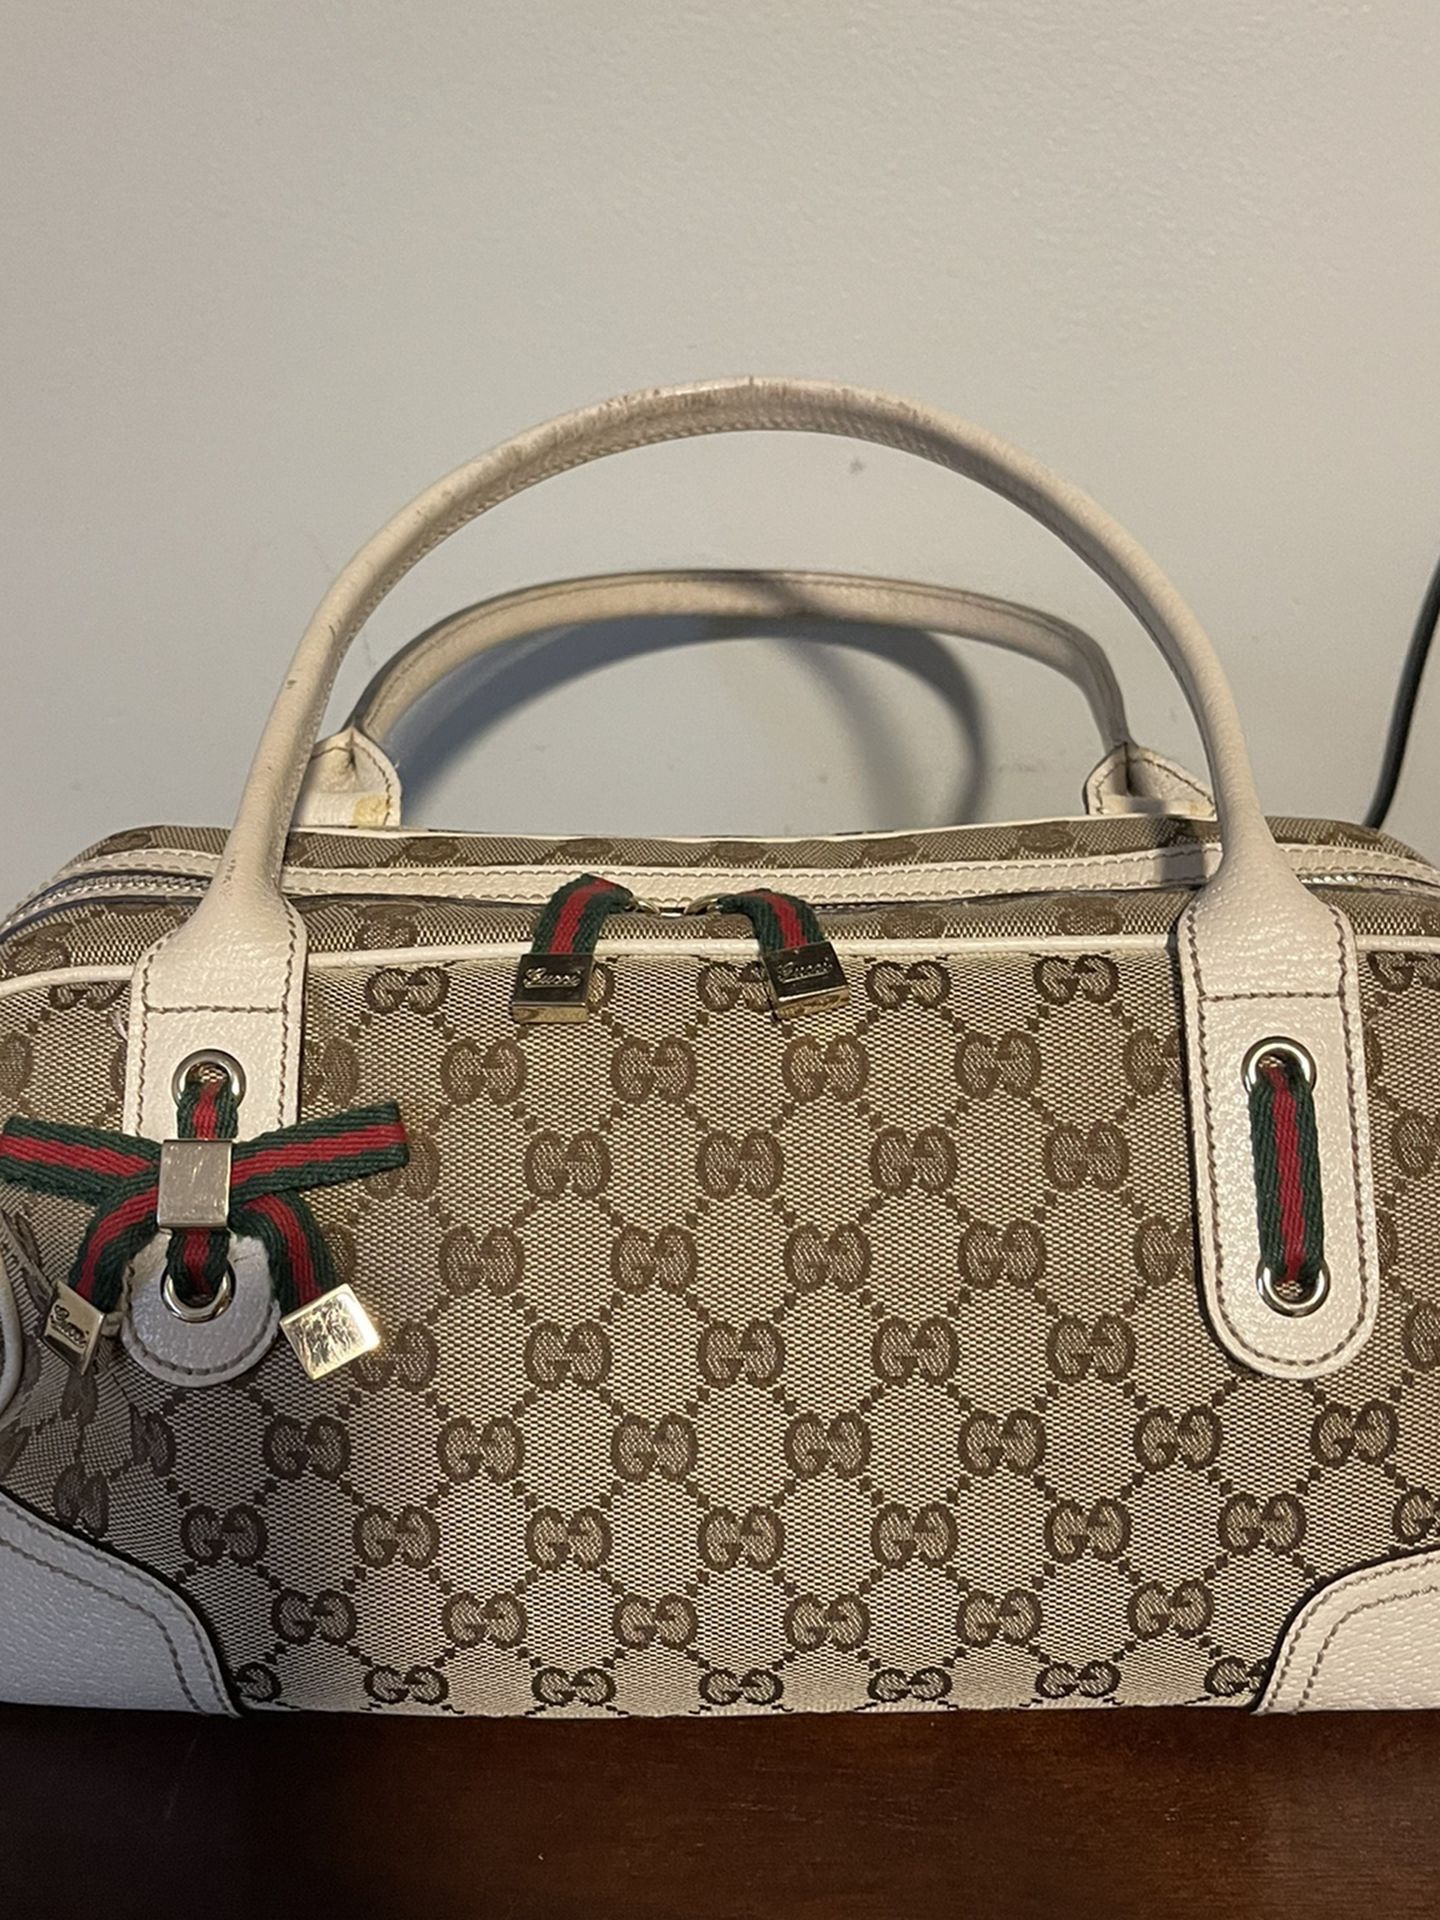 Authentic Gucci Bag